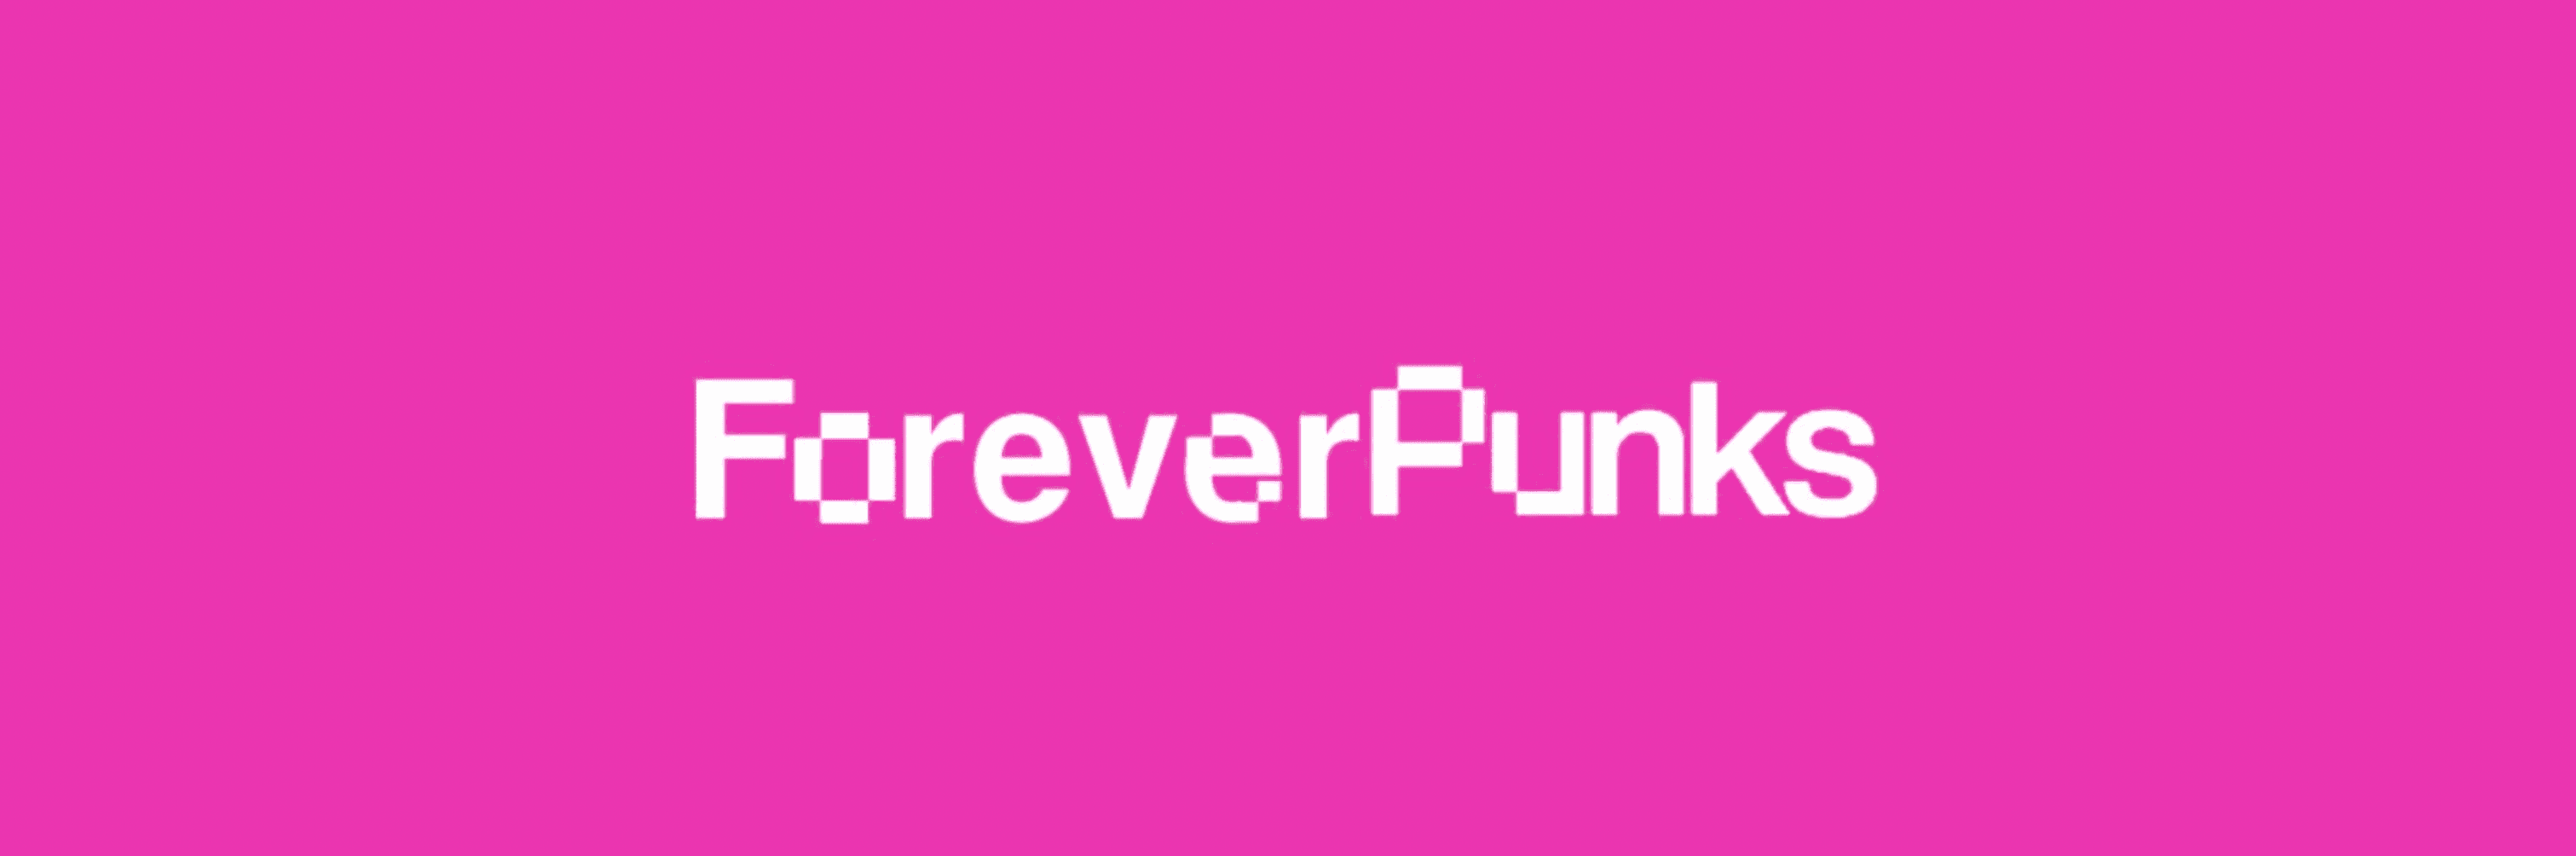 Foreverpunks Genesis